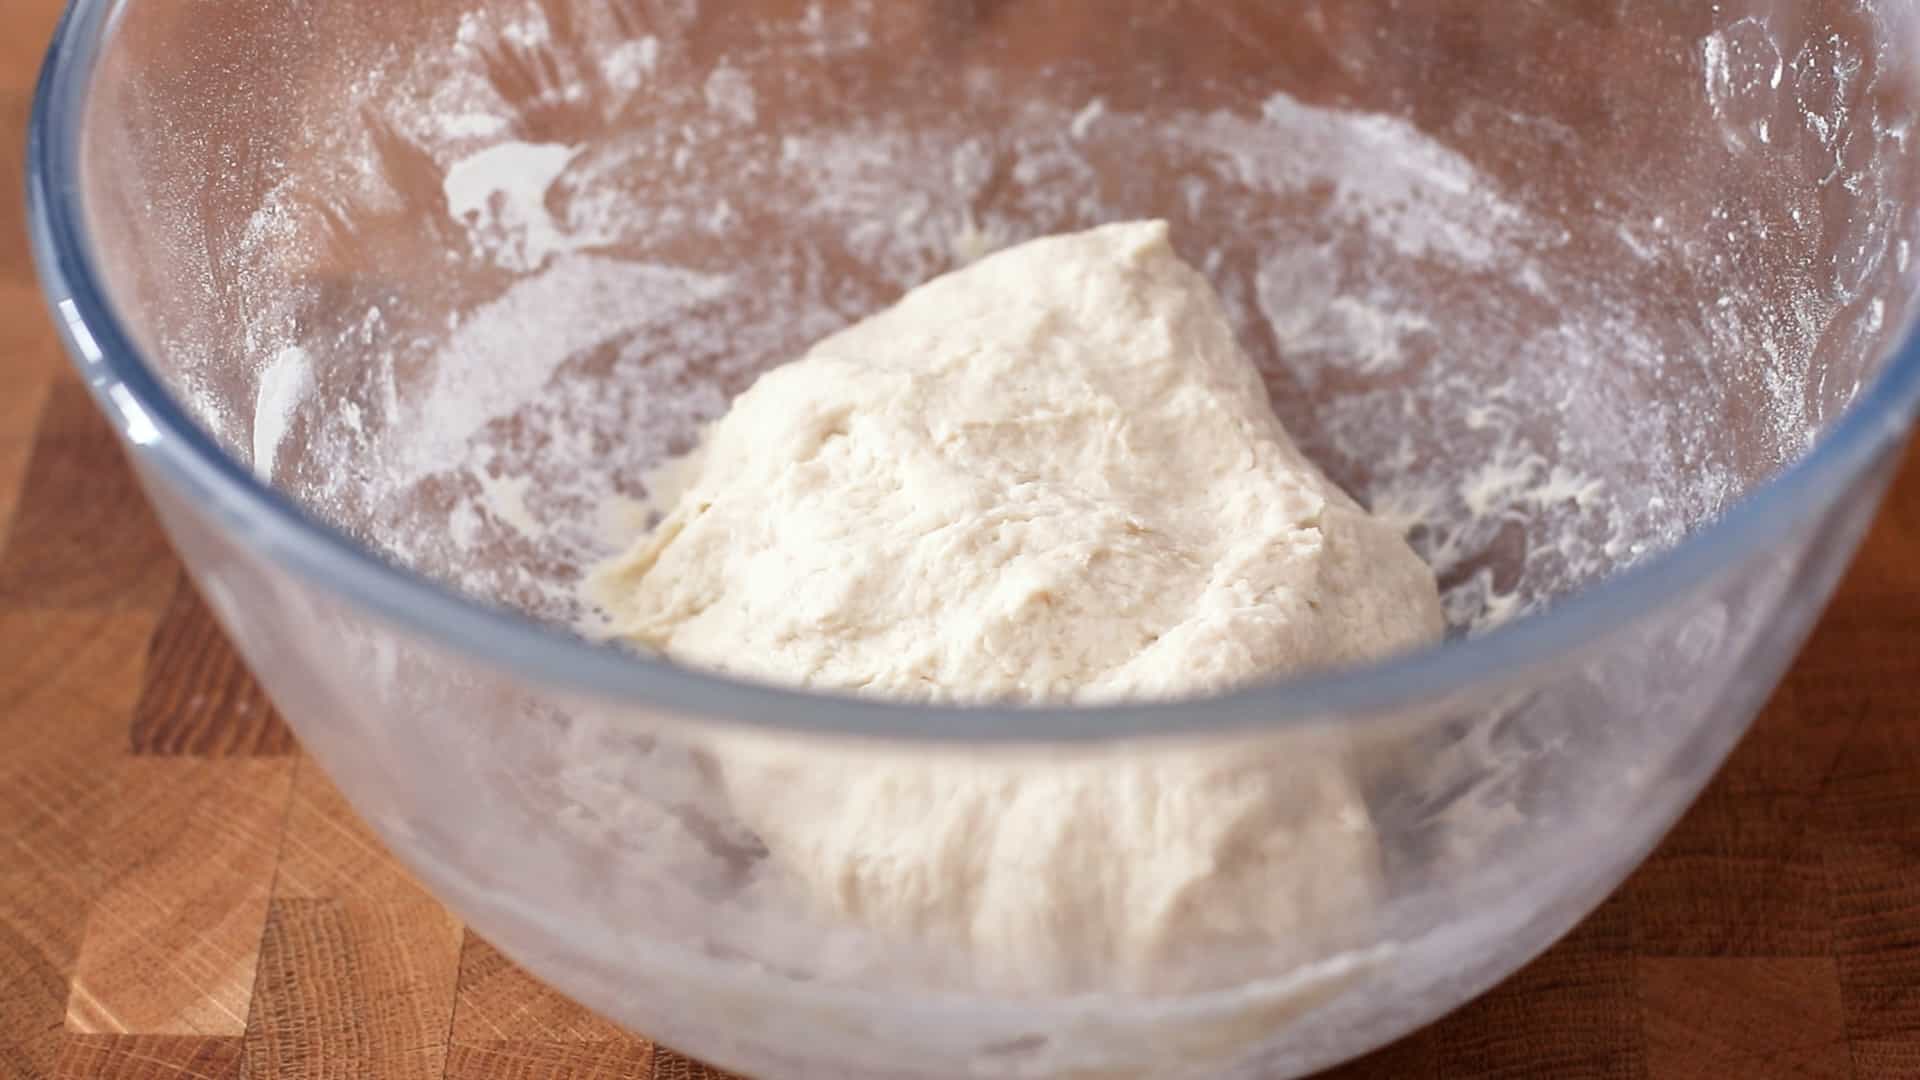 A shaggy ball of bread dough in a bowl